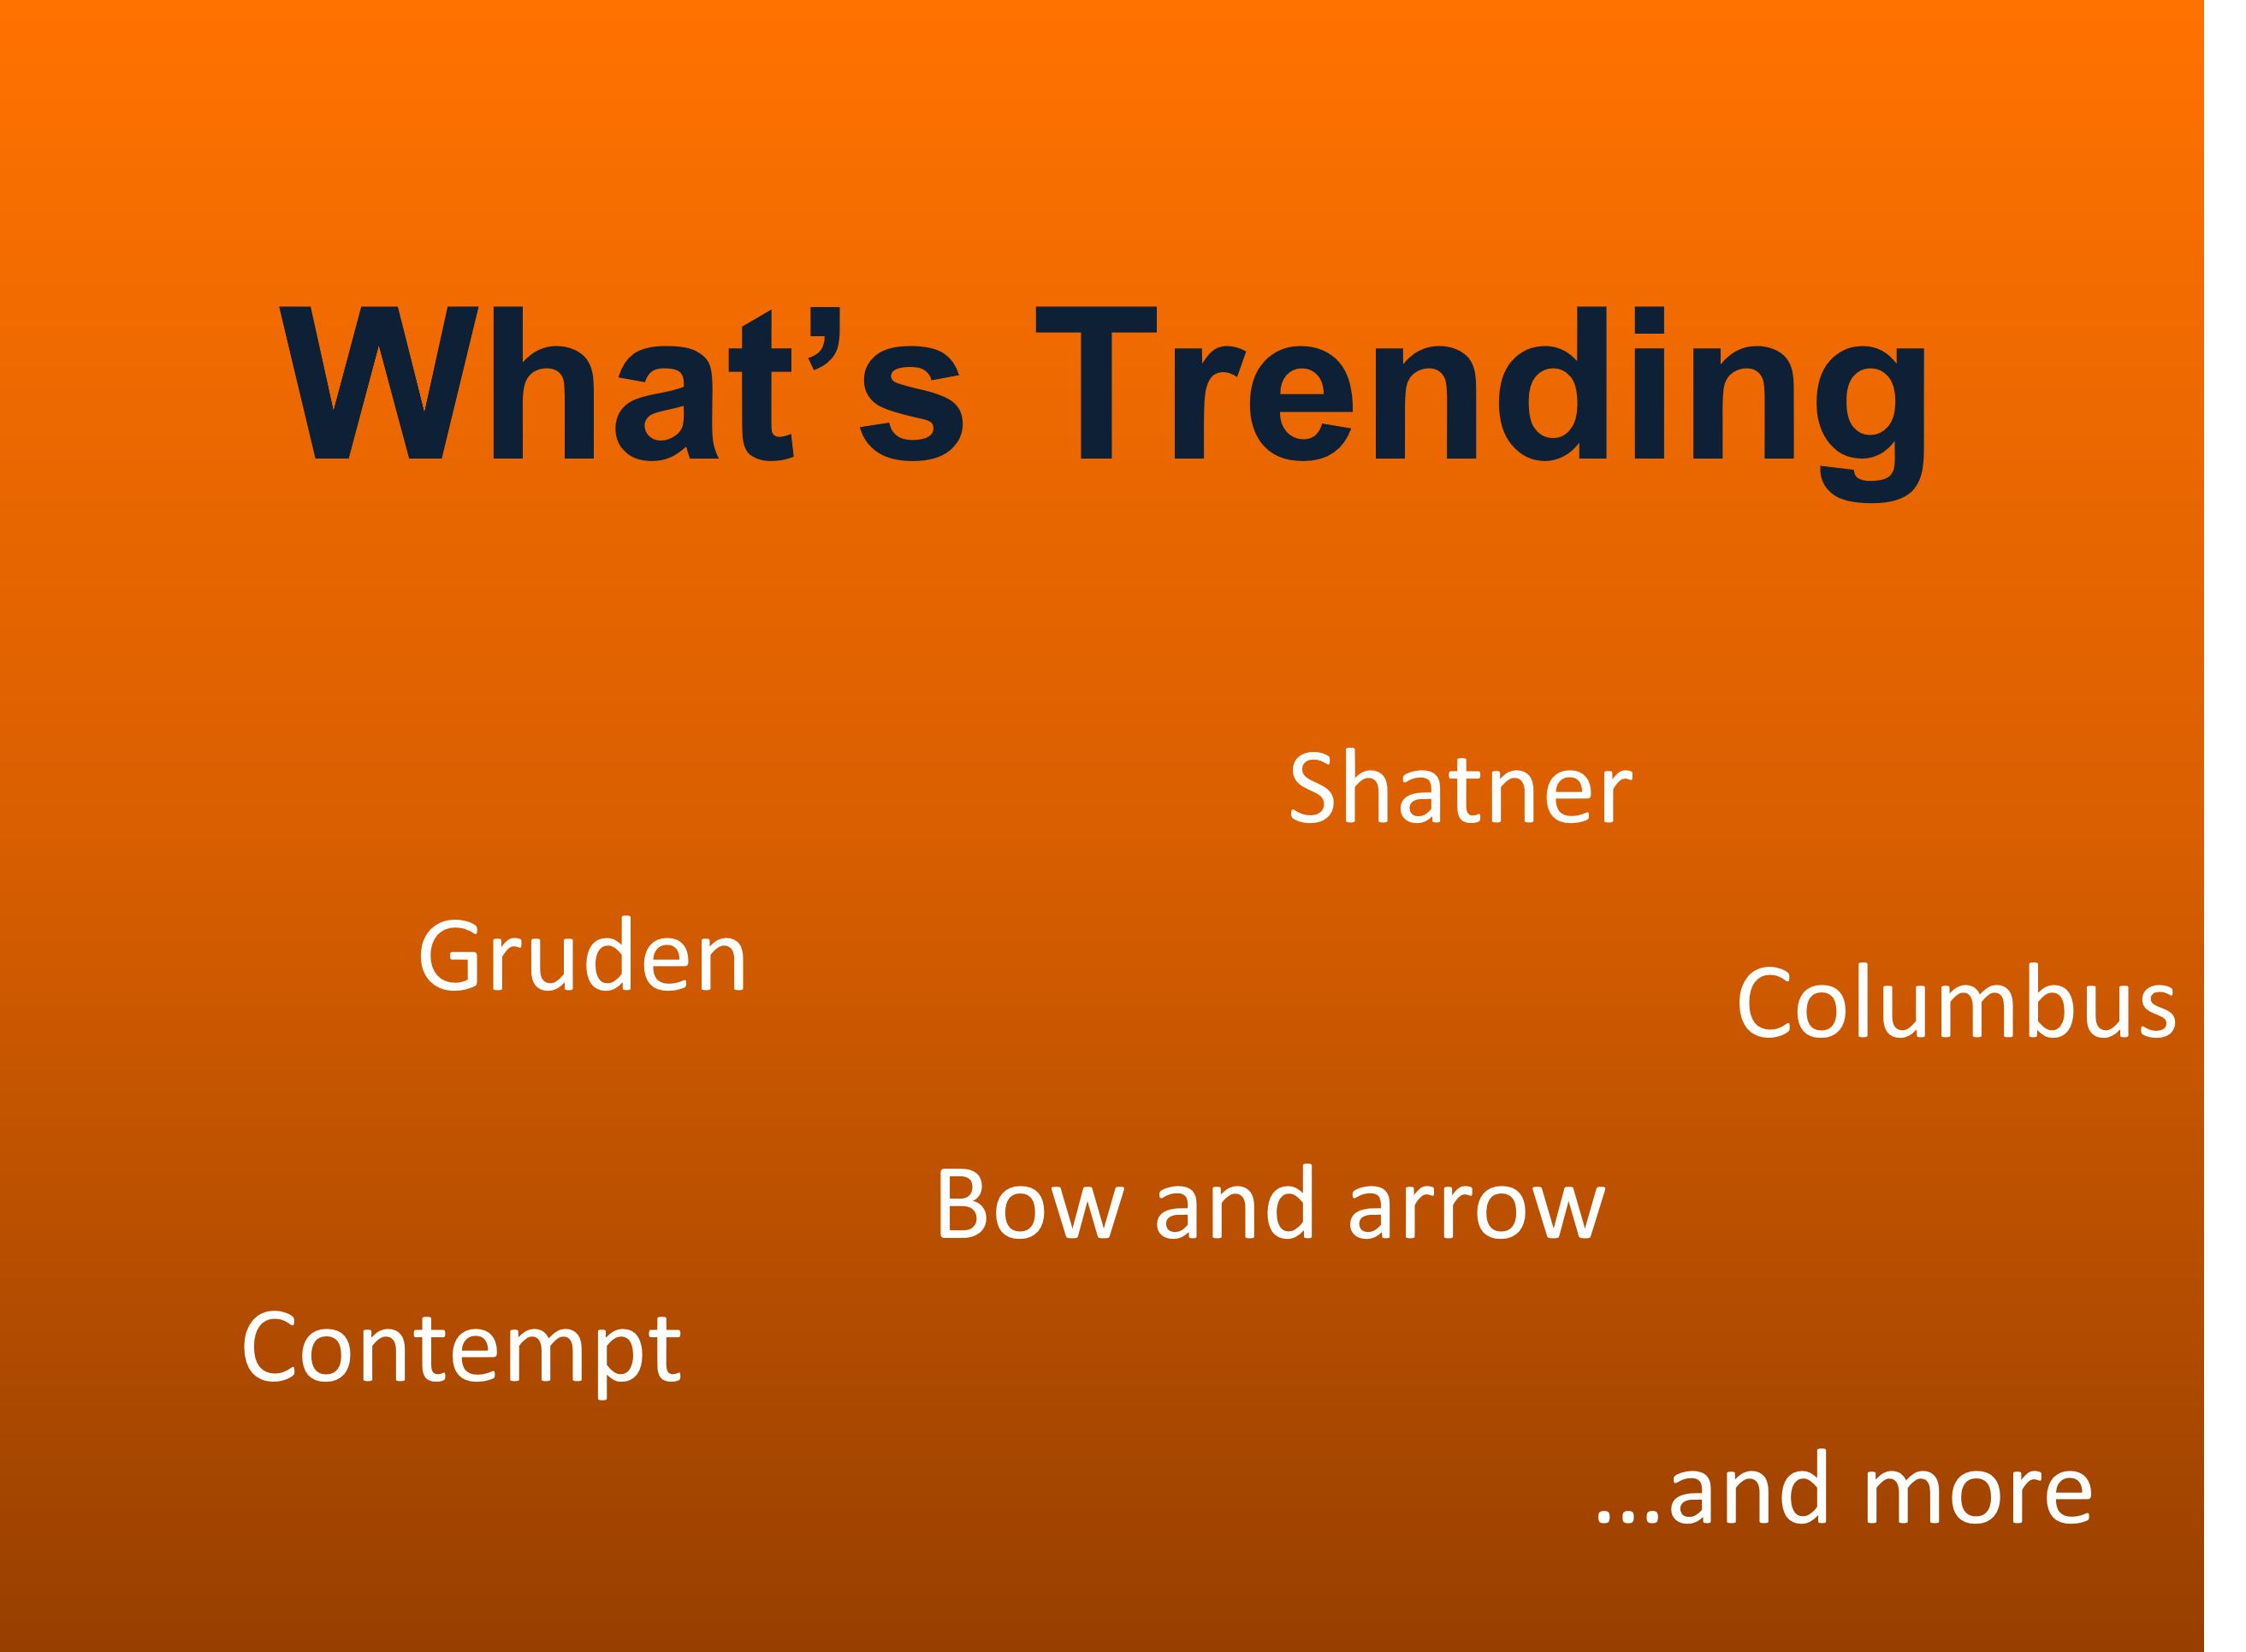 10/16/21 What's Trending This Week